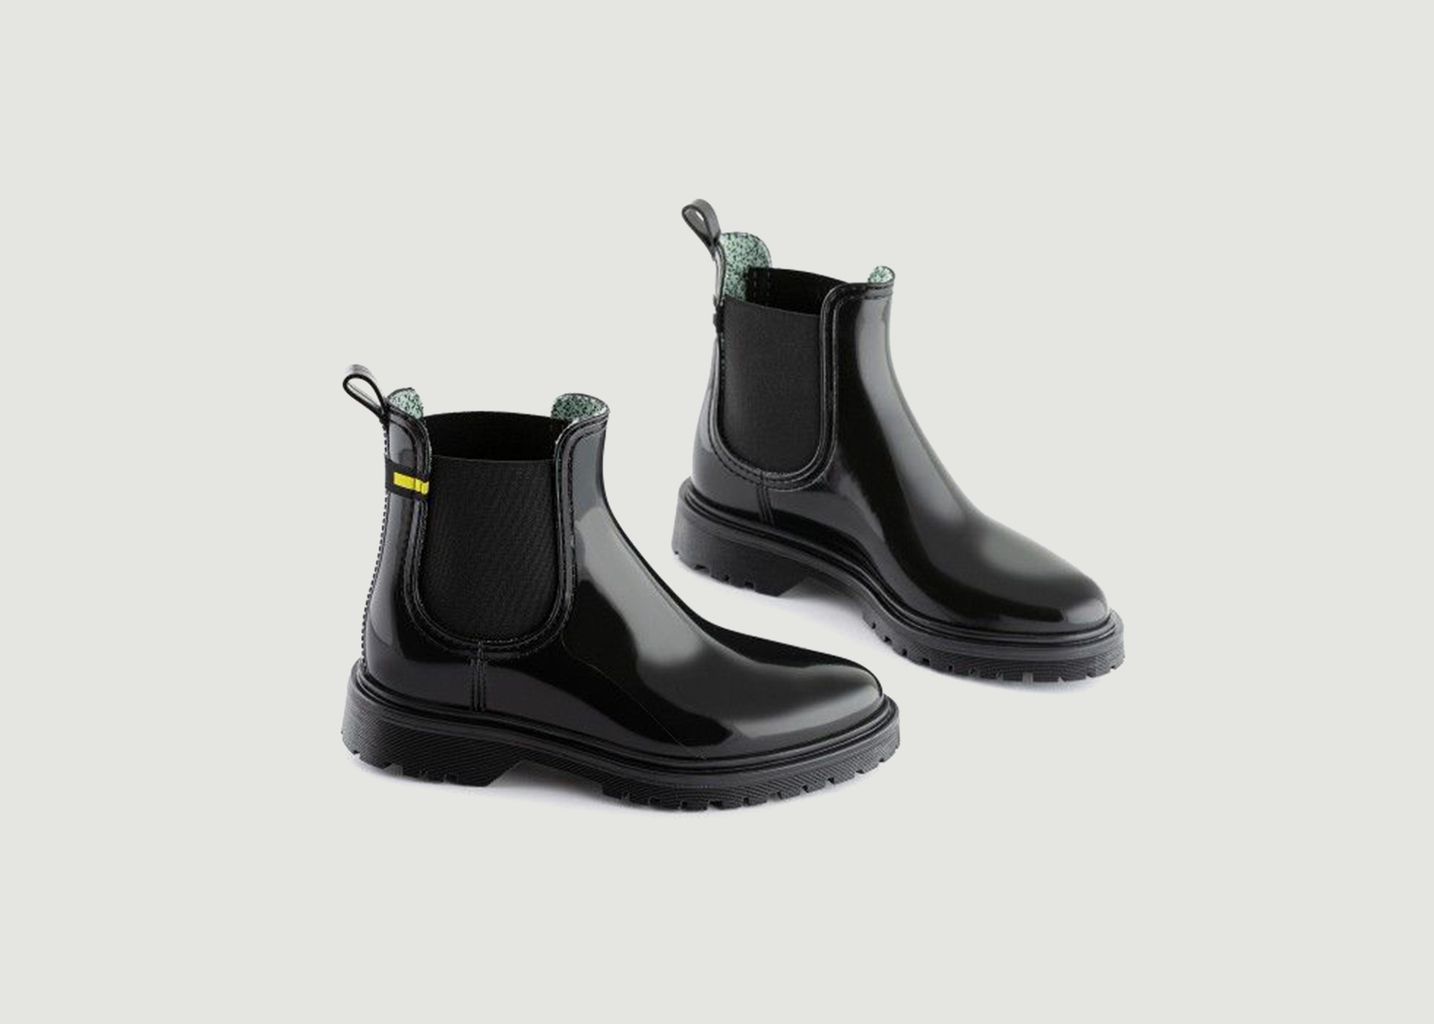 Maren rain boots - Lemon Jelly